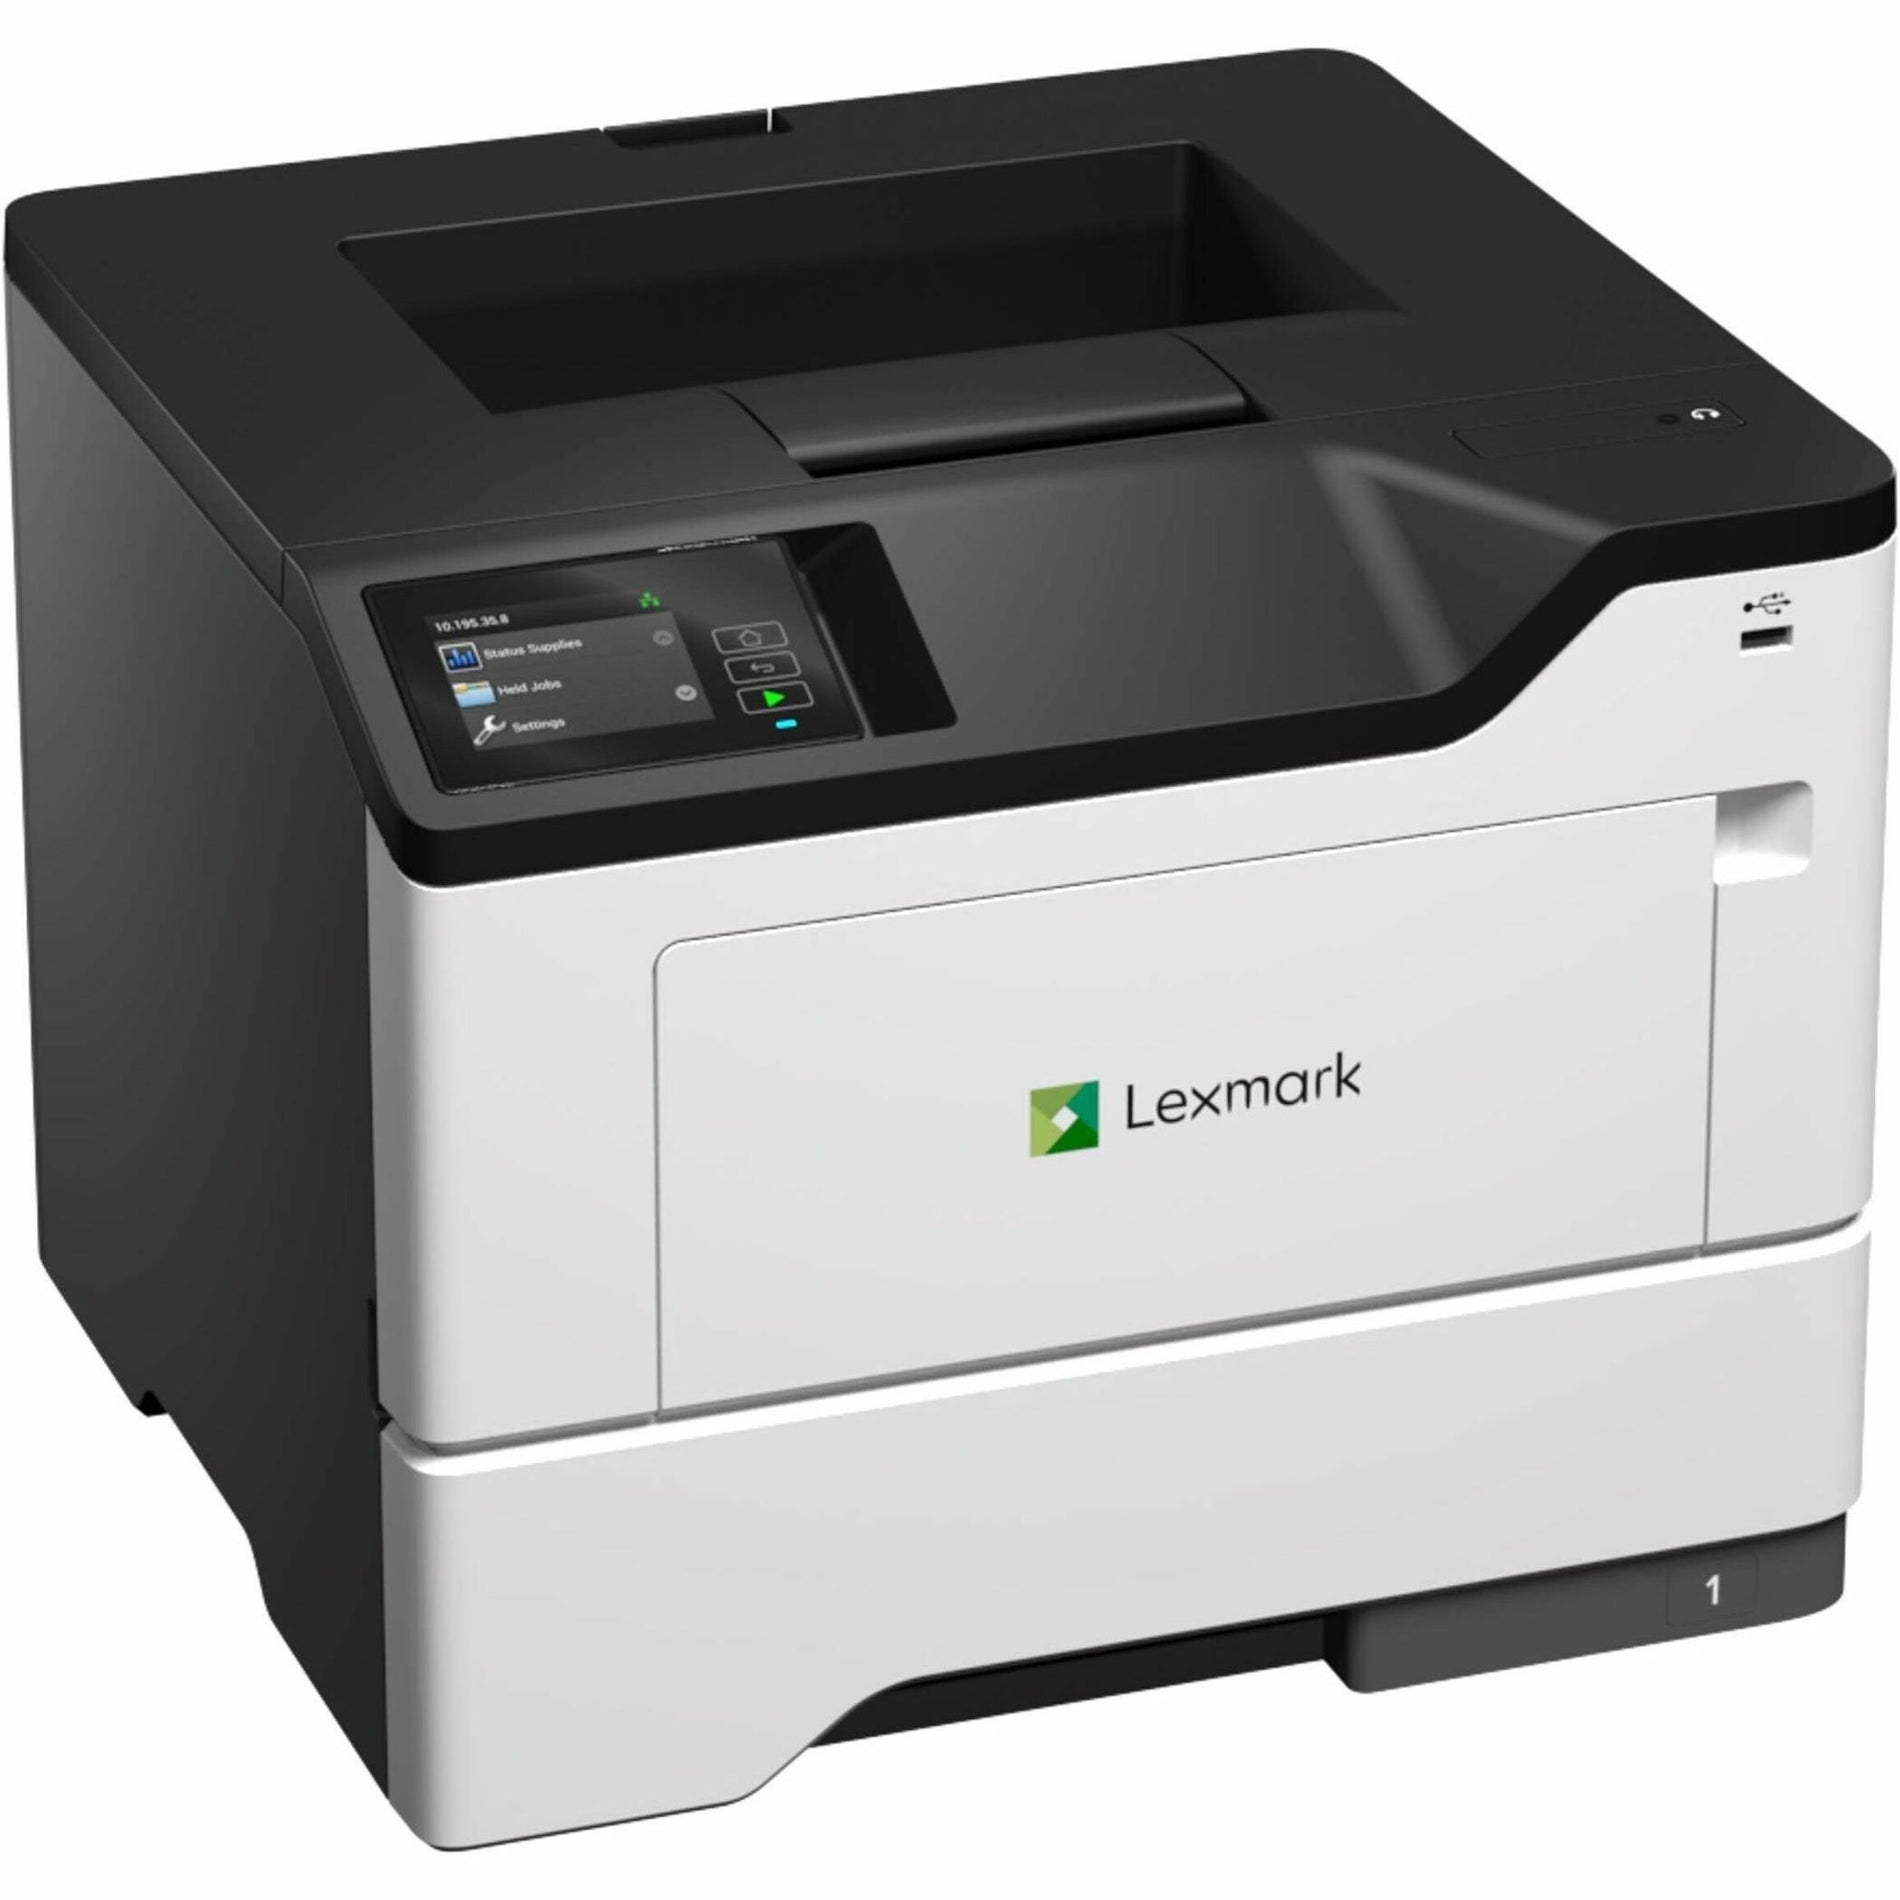 Lexmark 38S0400 MS631dw Bureau Imprimante Laser Filaire de bureau - Monochrome Conforme au TAA